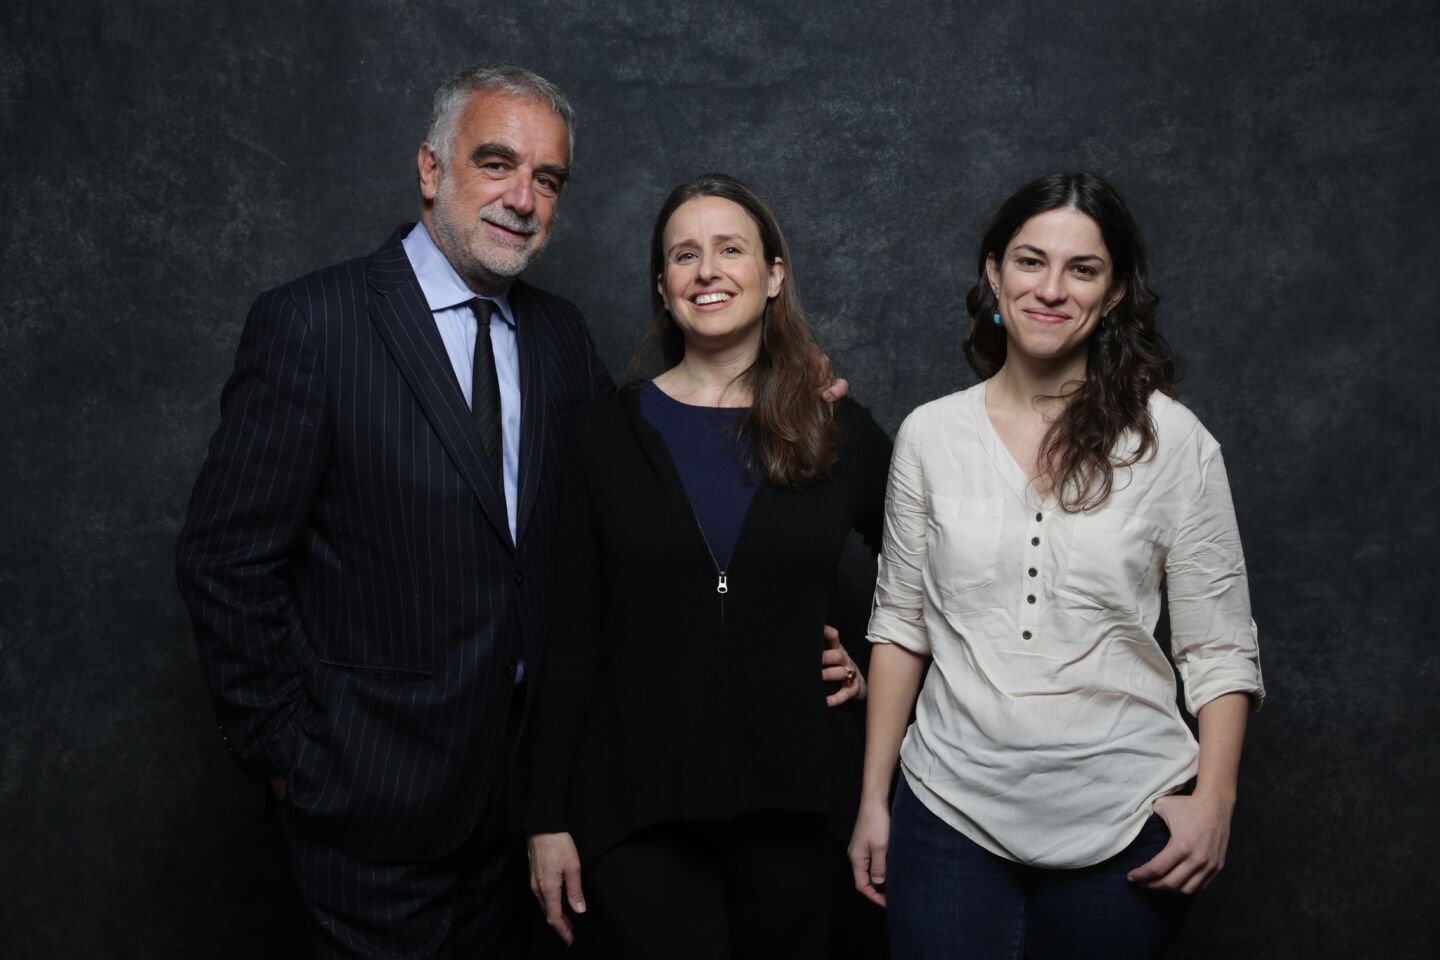 Luis Moreno Ocampo, Edet Belzberg, Amelia Green-Dove